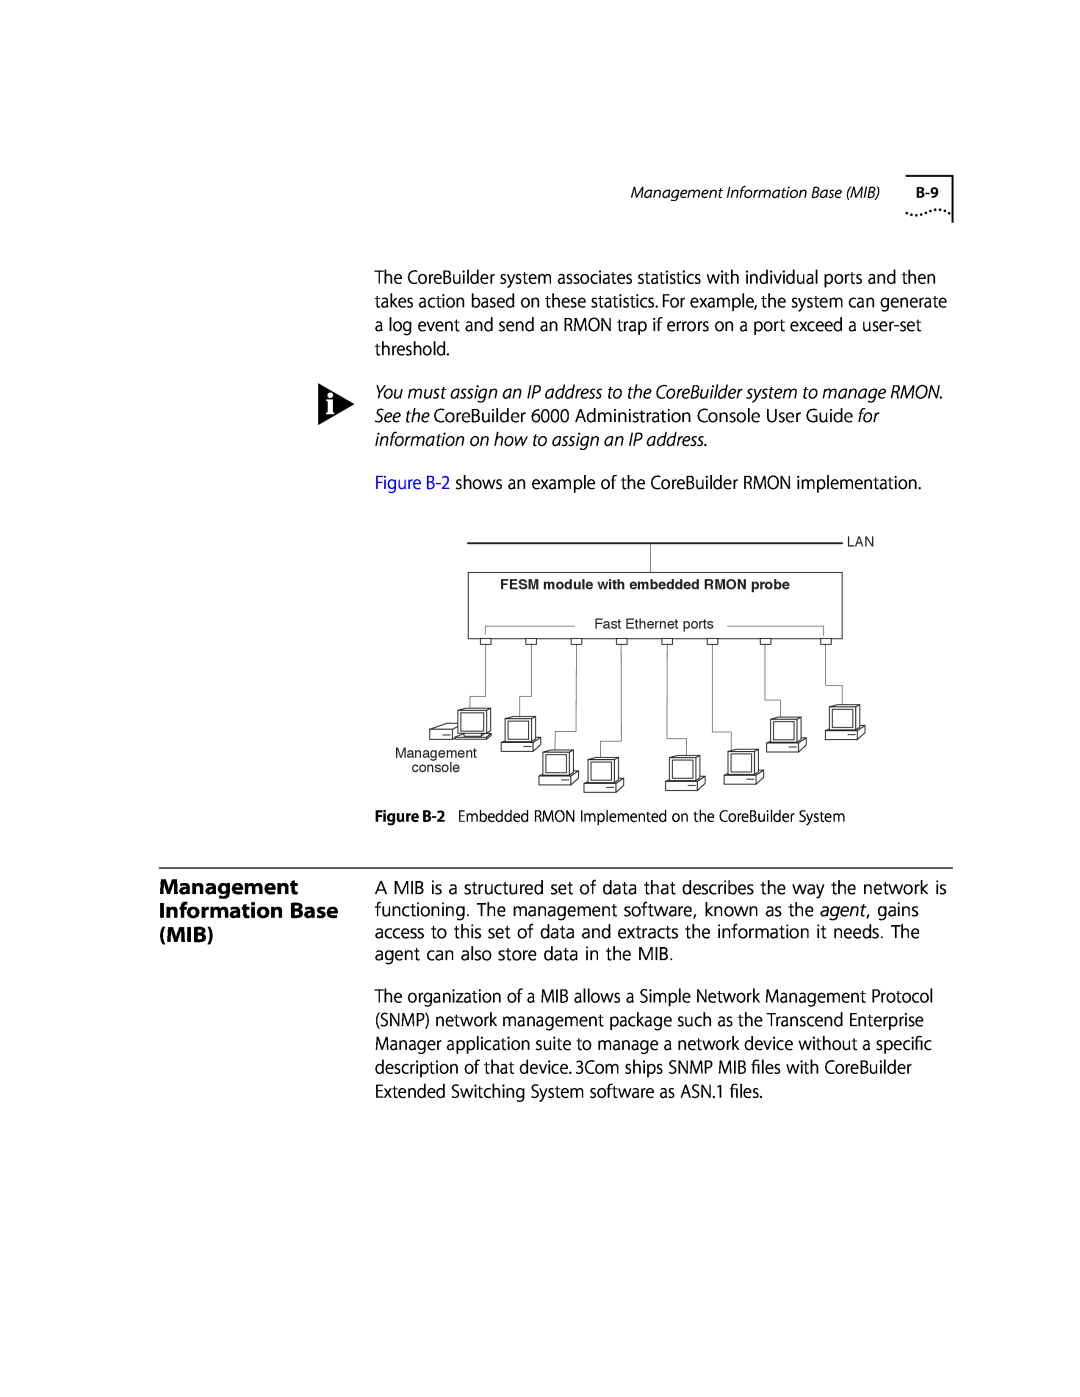 3Com 10002211 manual Management Information Base MIB, Figure B-2 shows an example of the CoreBuilder RMON implementation 